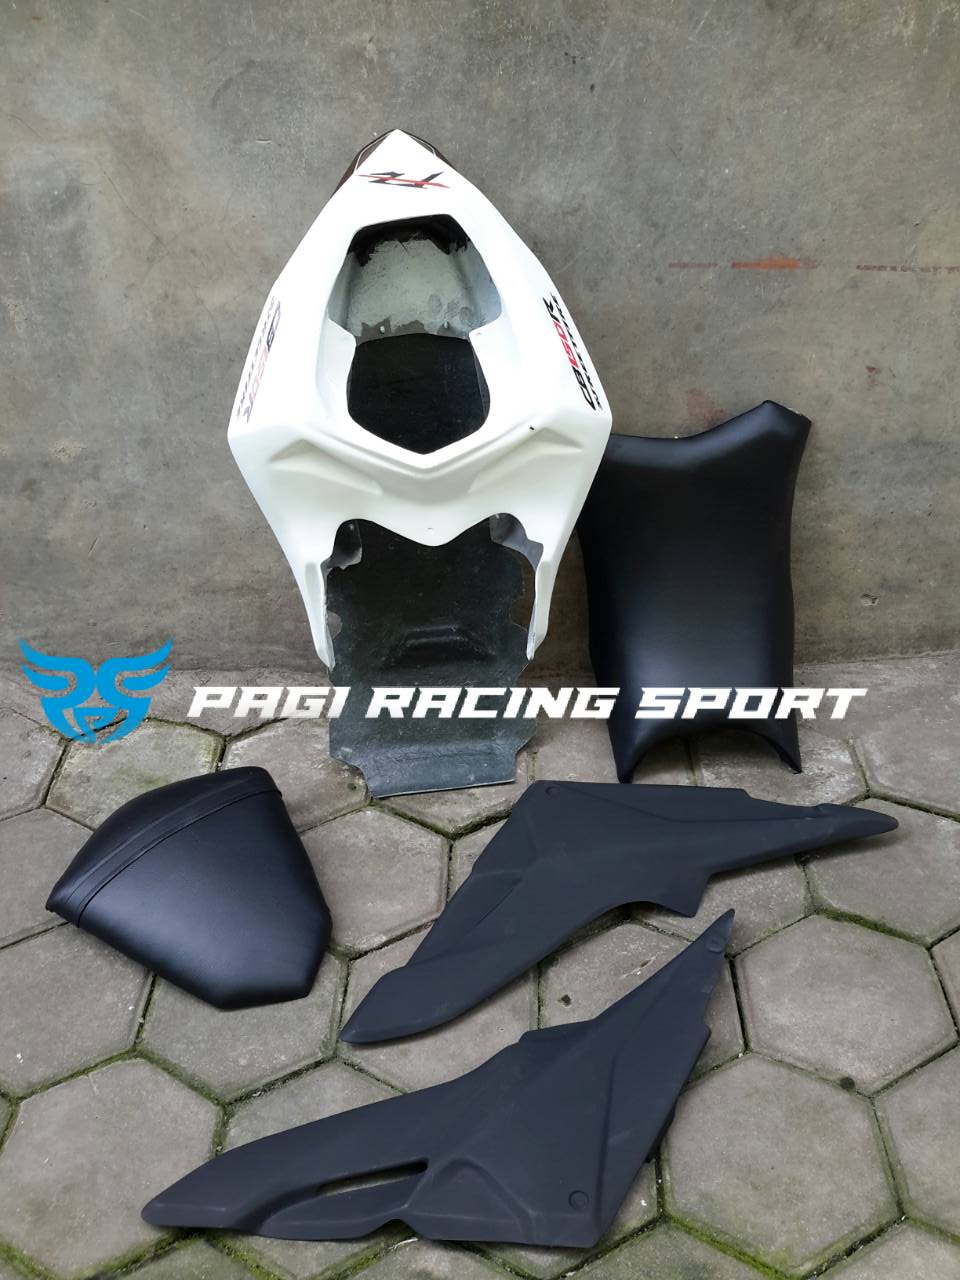 Body Belakang CB150R ala Ninja  250  FI  Pagi Racing Sport